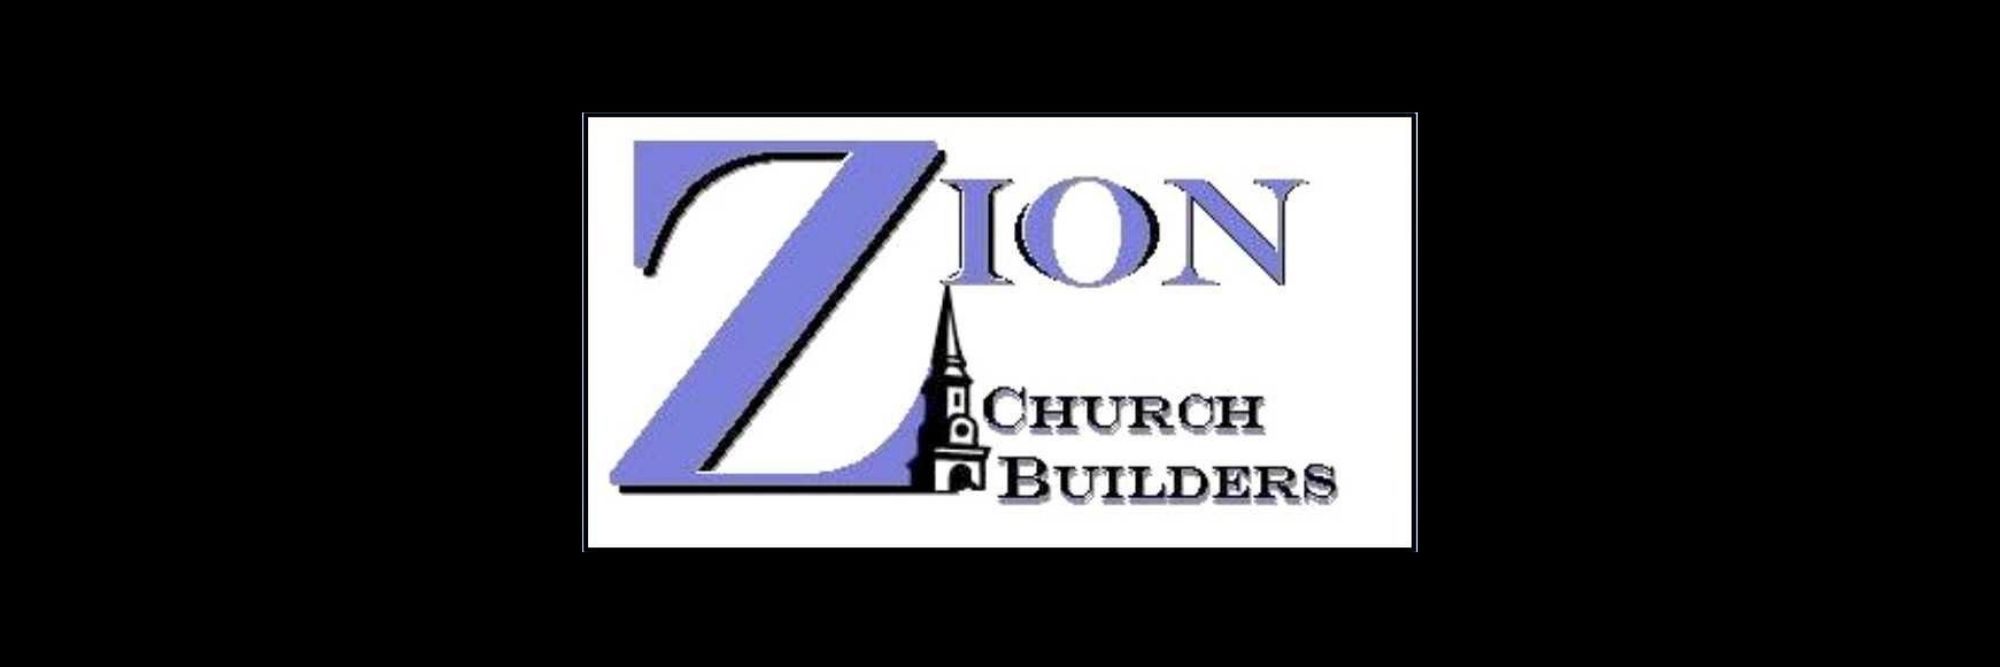 ZION CHURCH BUILDERS